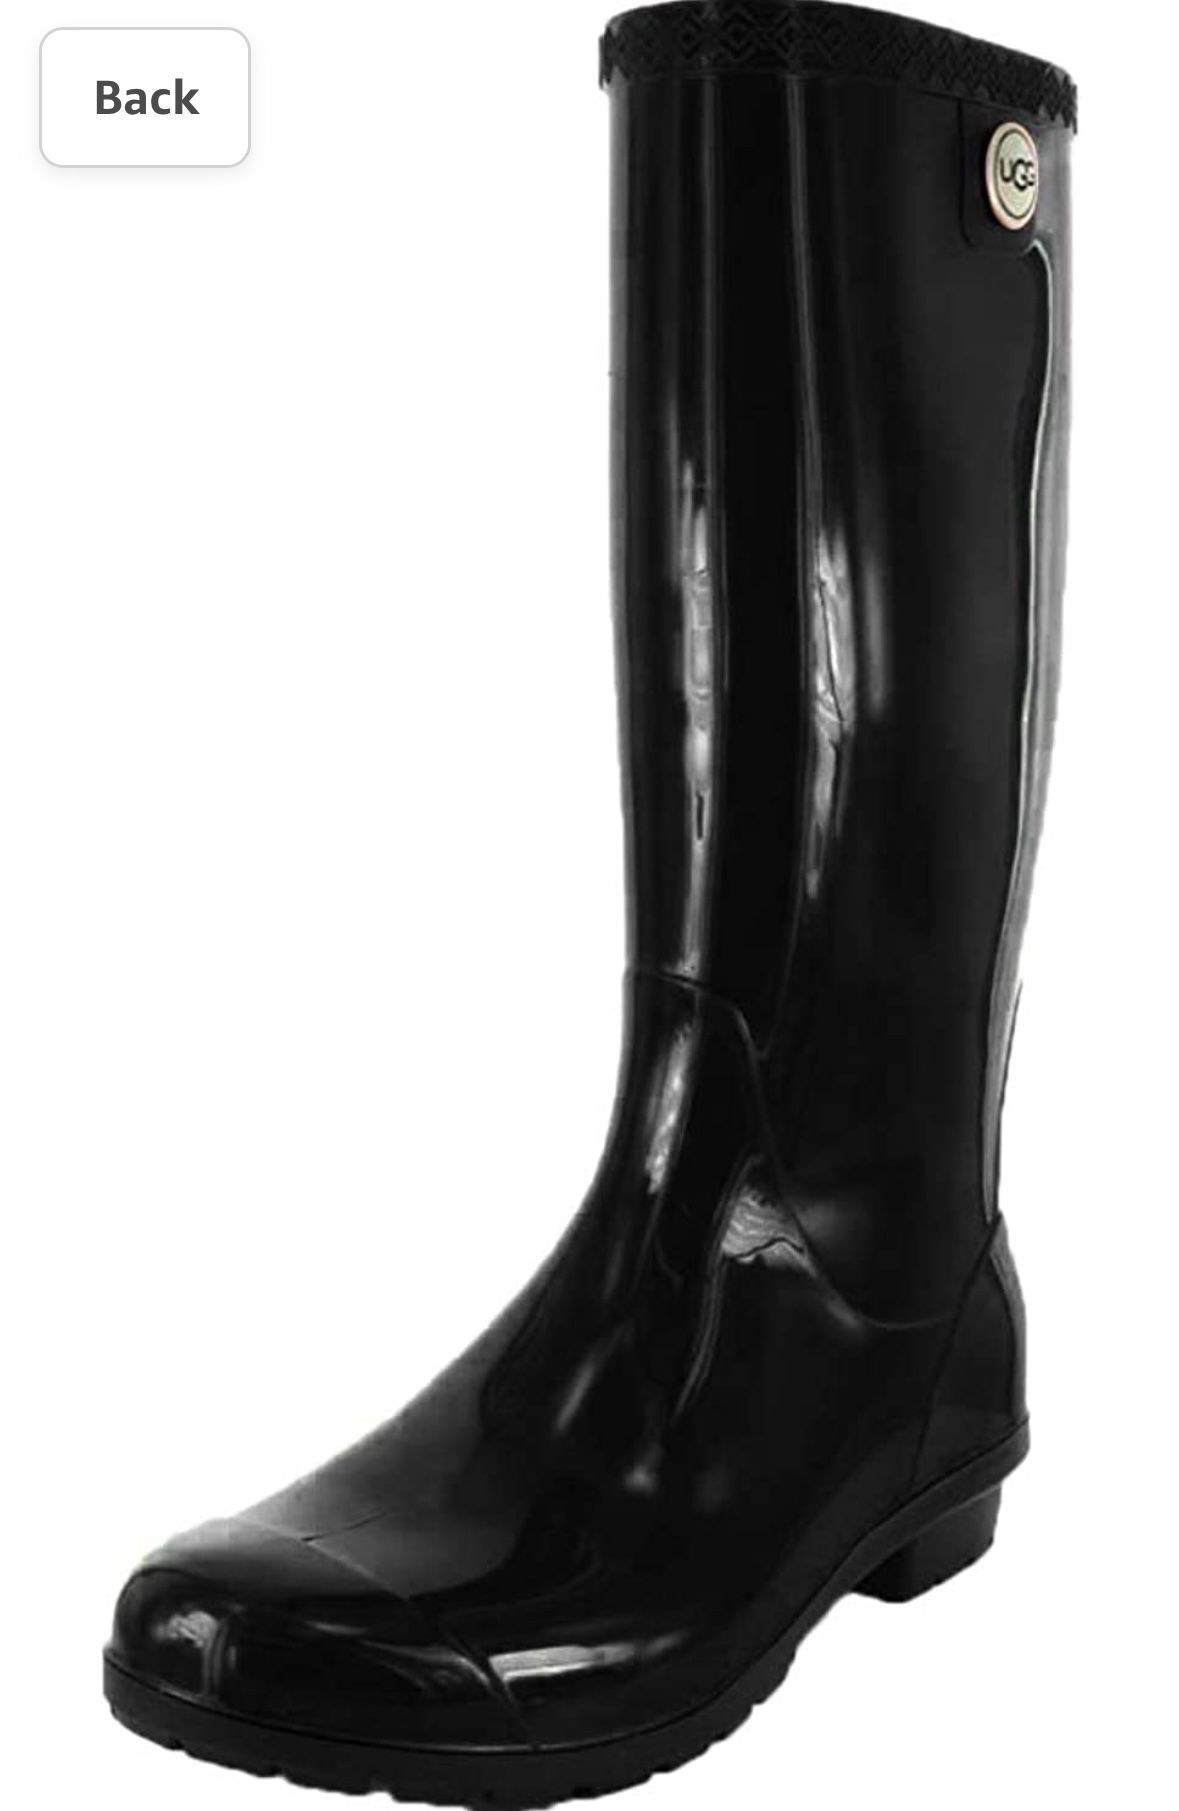 UGG Rain boots 